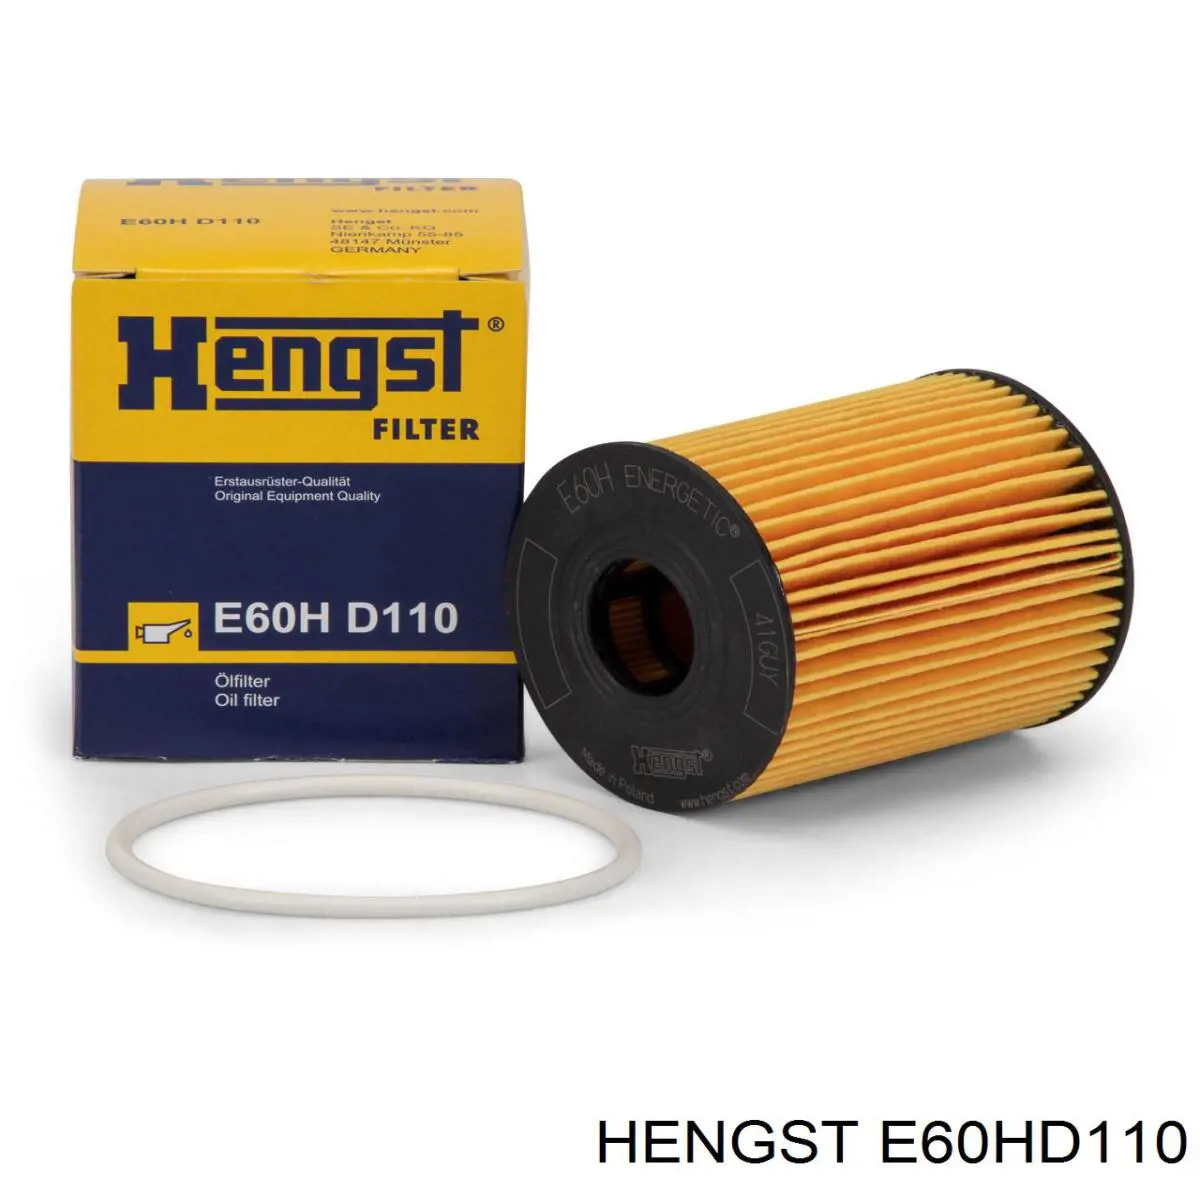 E60HD110 Hengst filtro de aceite